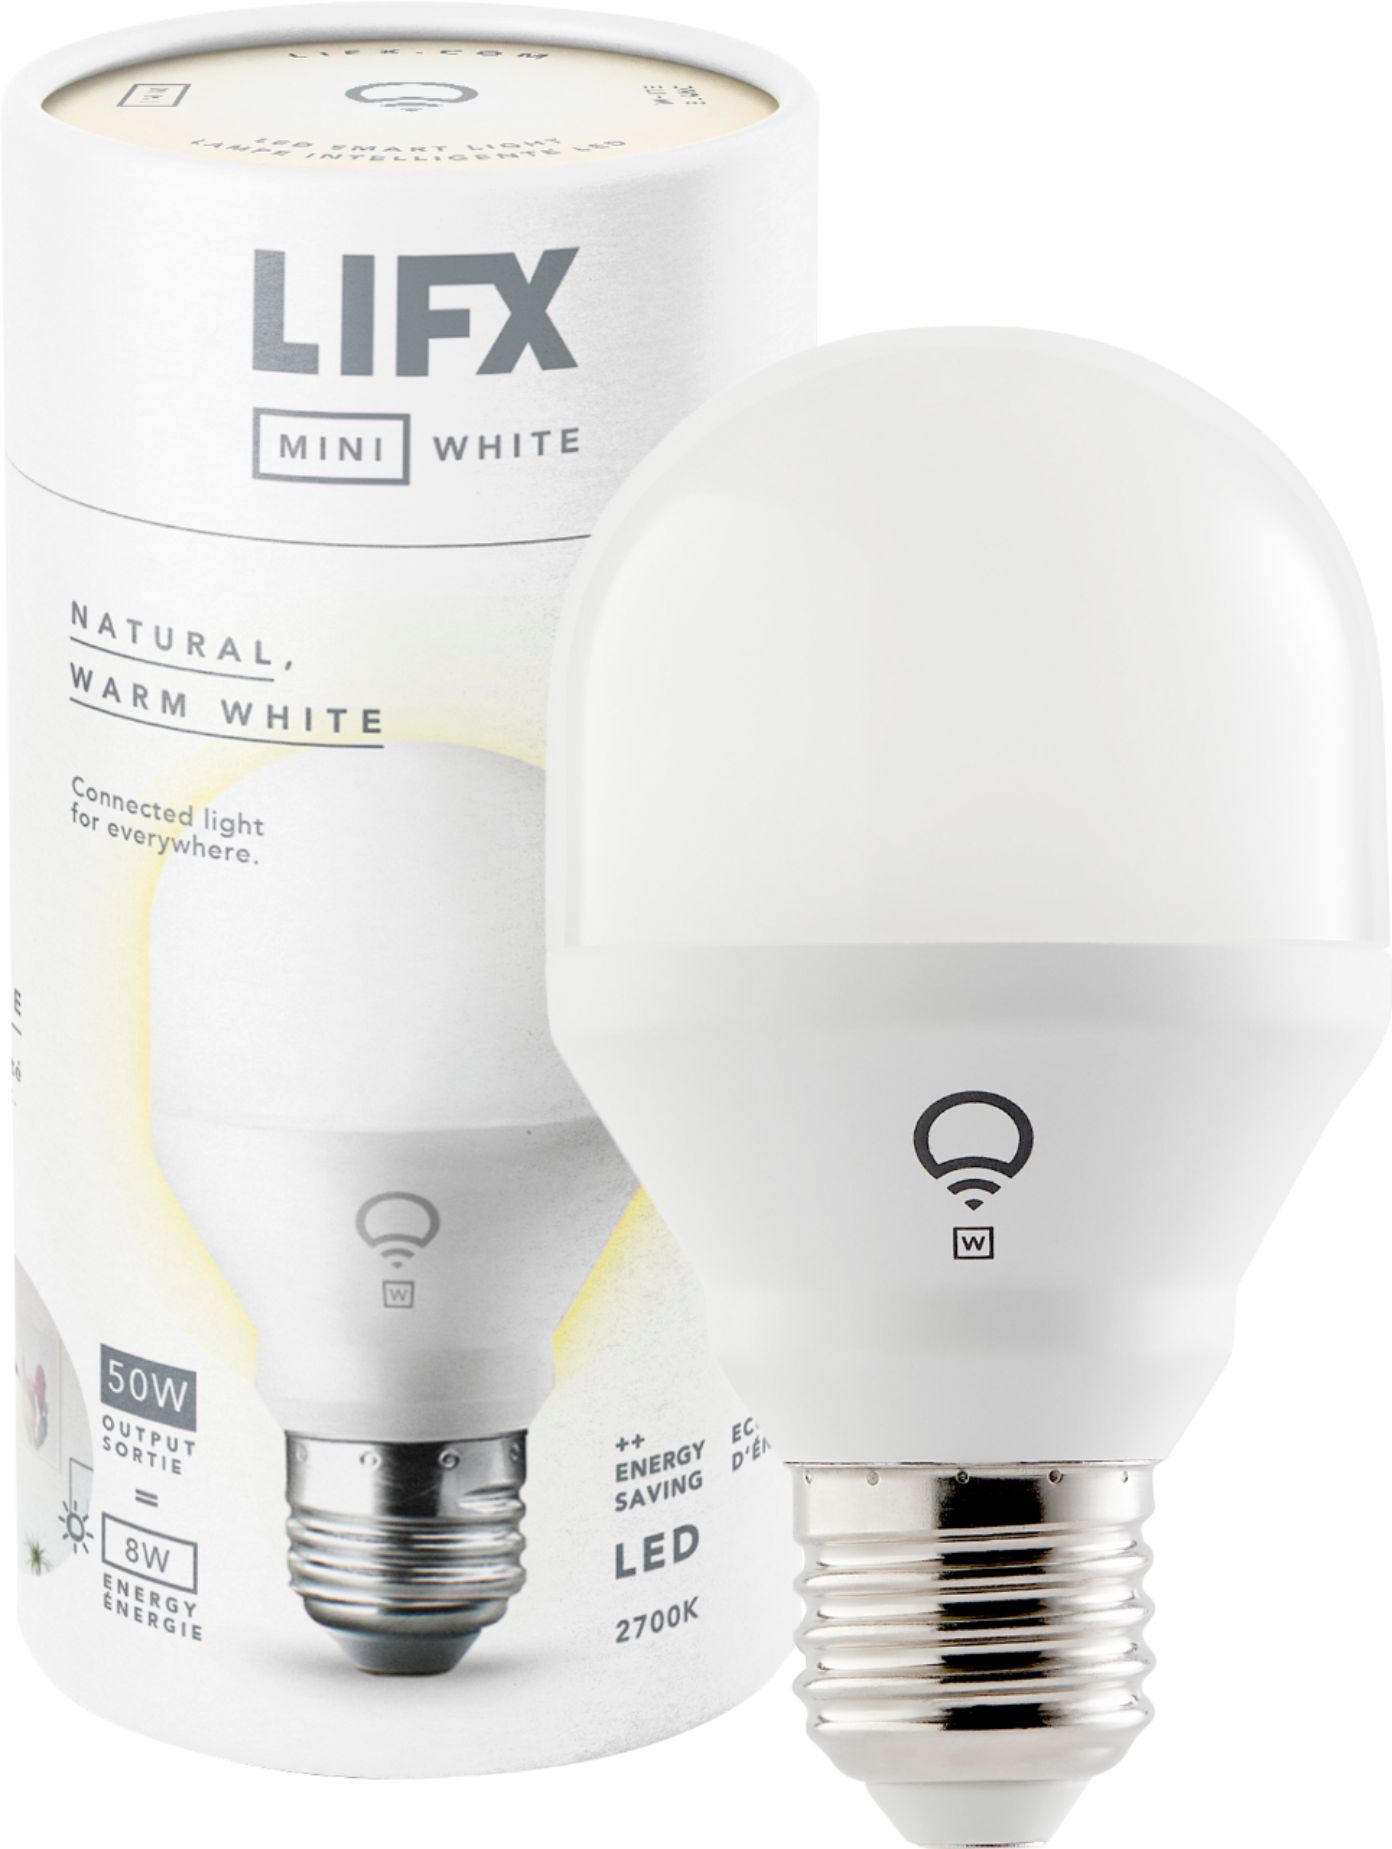 White Daylight  Wi-Fi Smart LED Light Bulb sealed 2700K Warm LIFX A19 Mini 